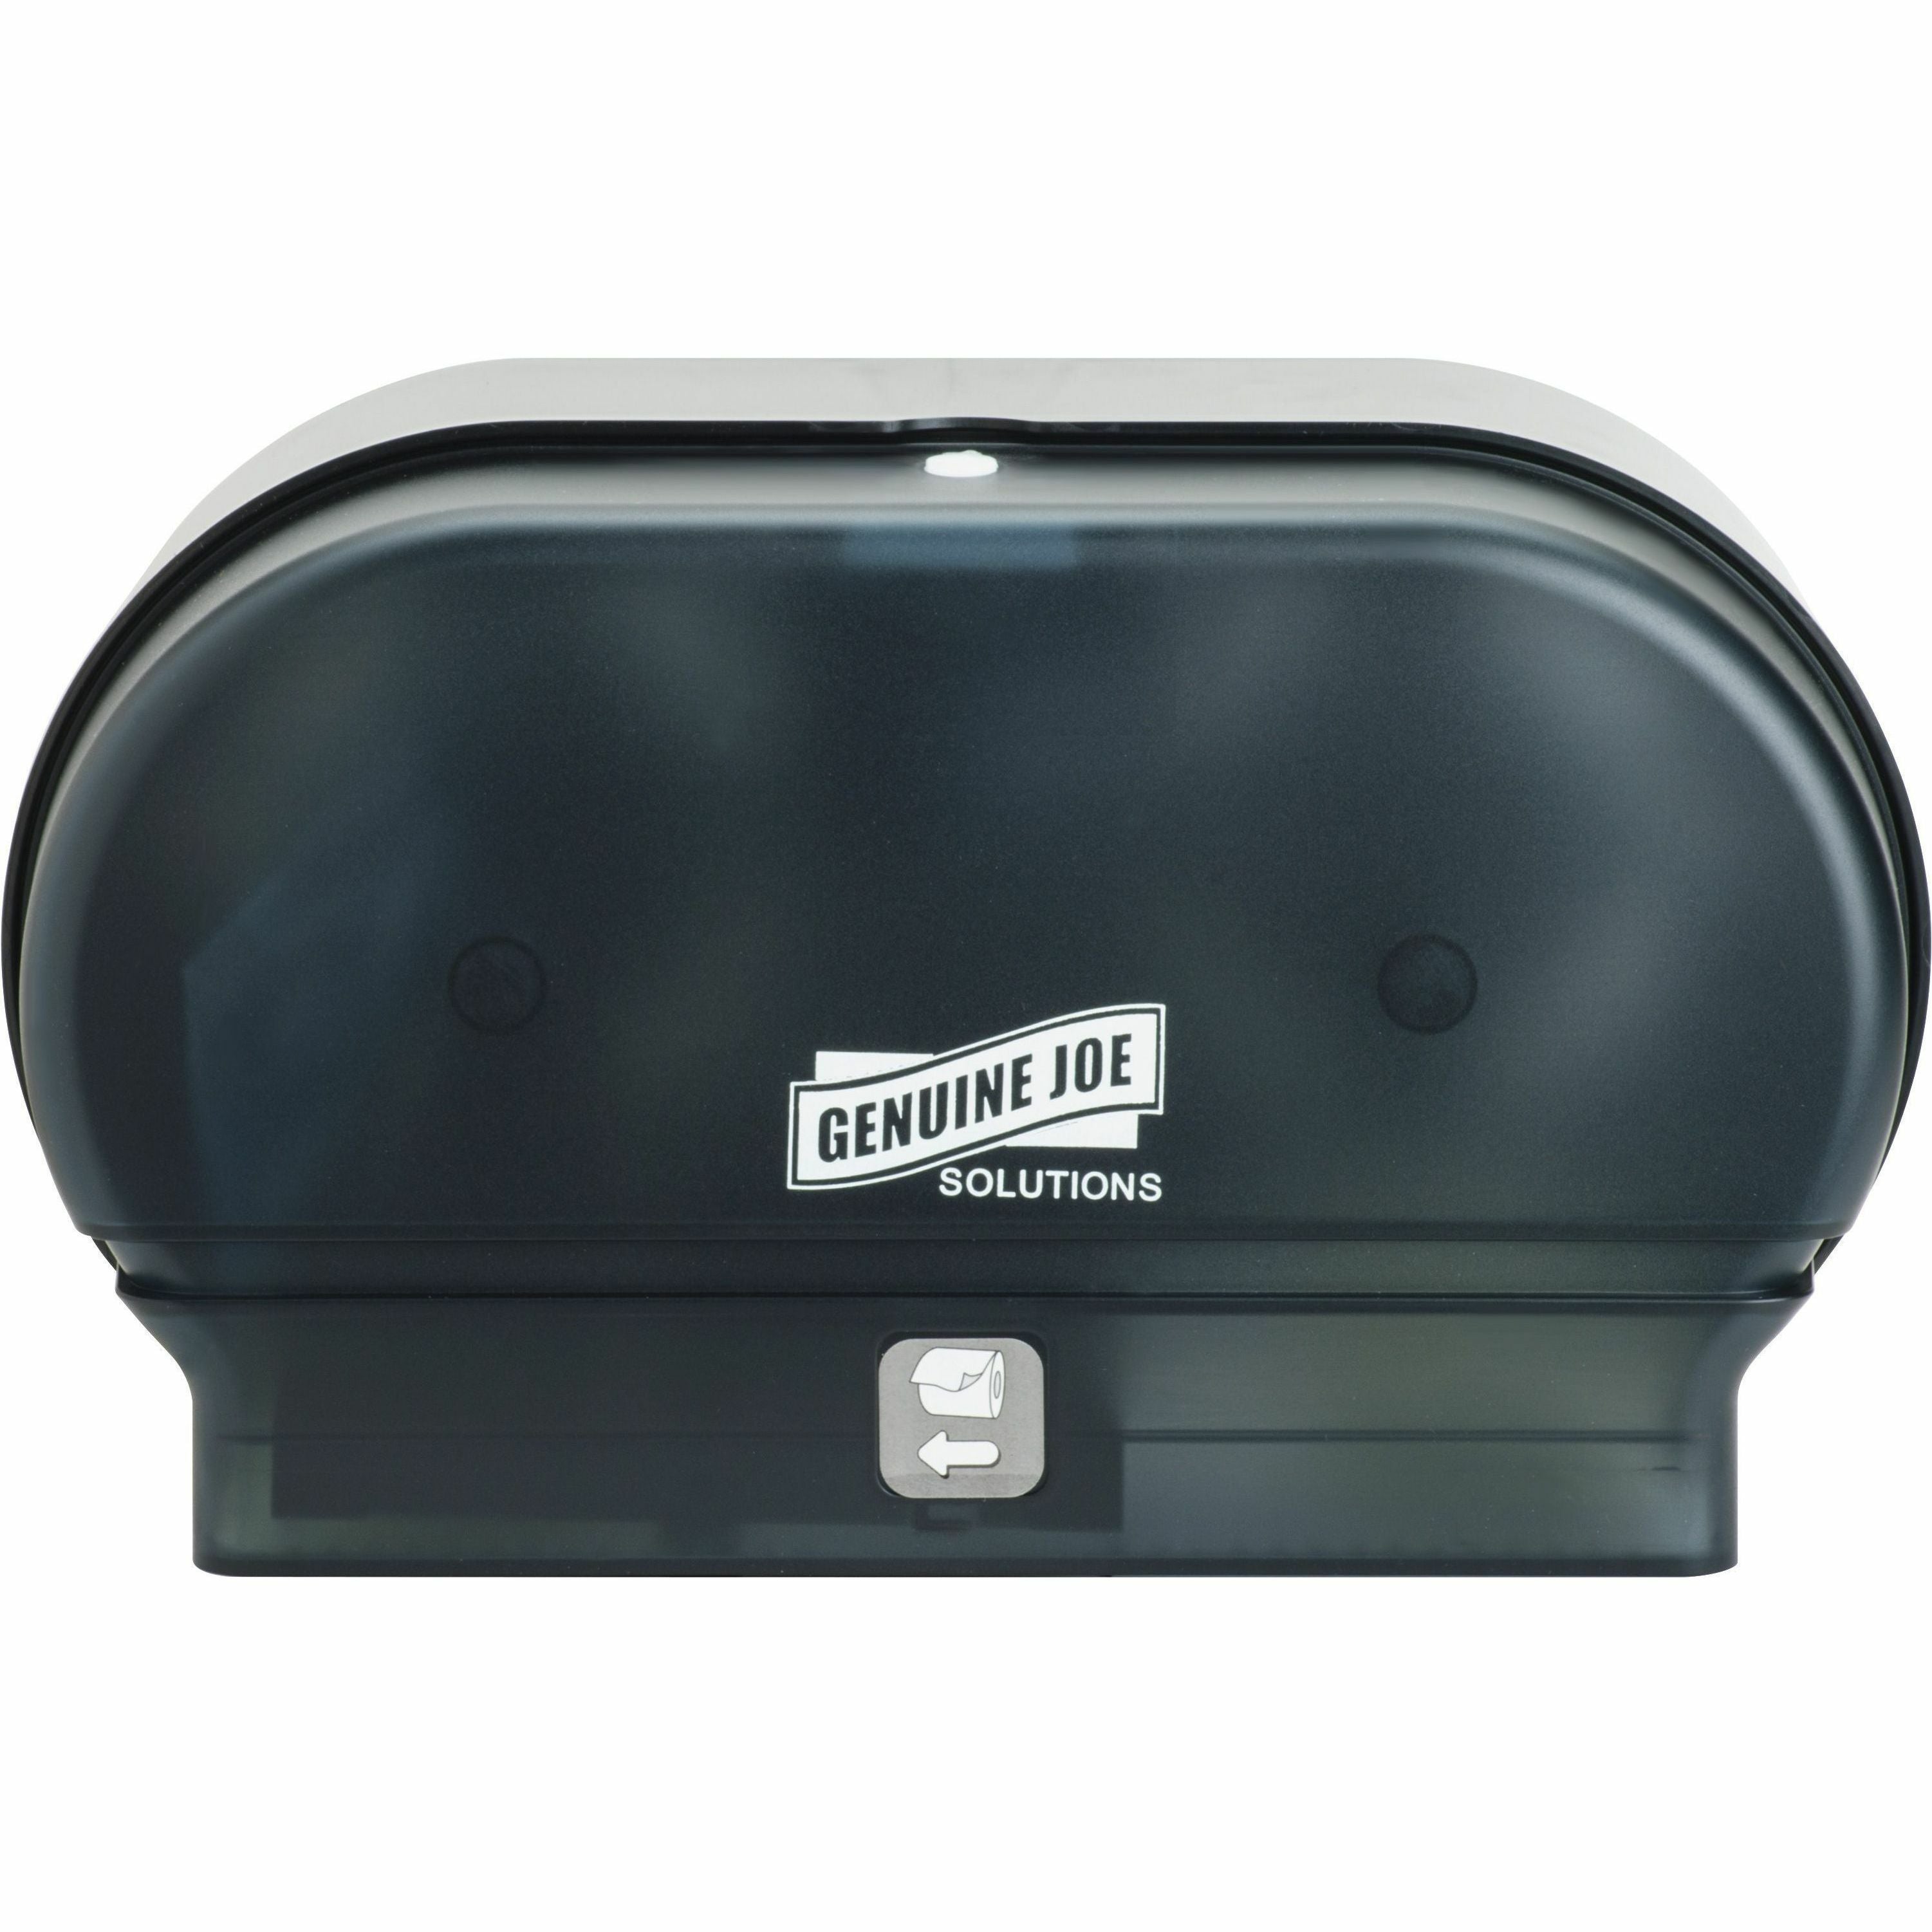 Genuine Joe Solutions Standard Bath Tissue Roll Dispenser - Manual - 2000 x Sheet, 2 x Roll - Black - Sliding Door - 1 Each - 2